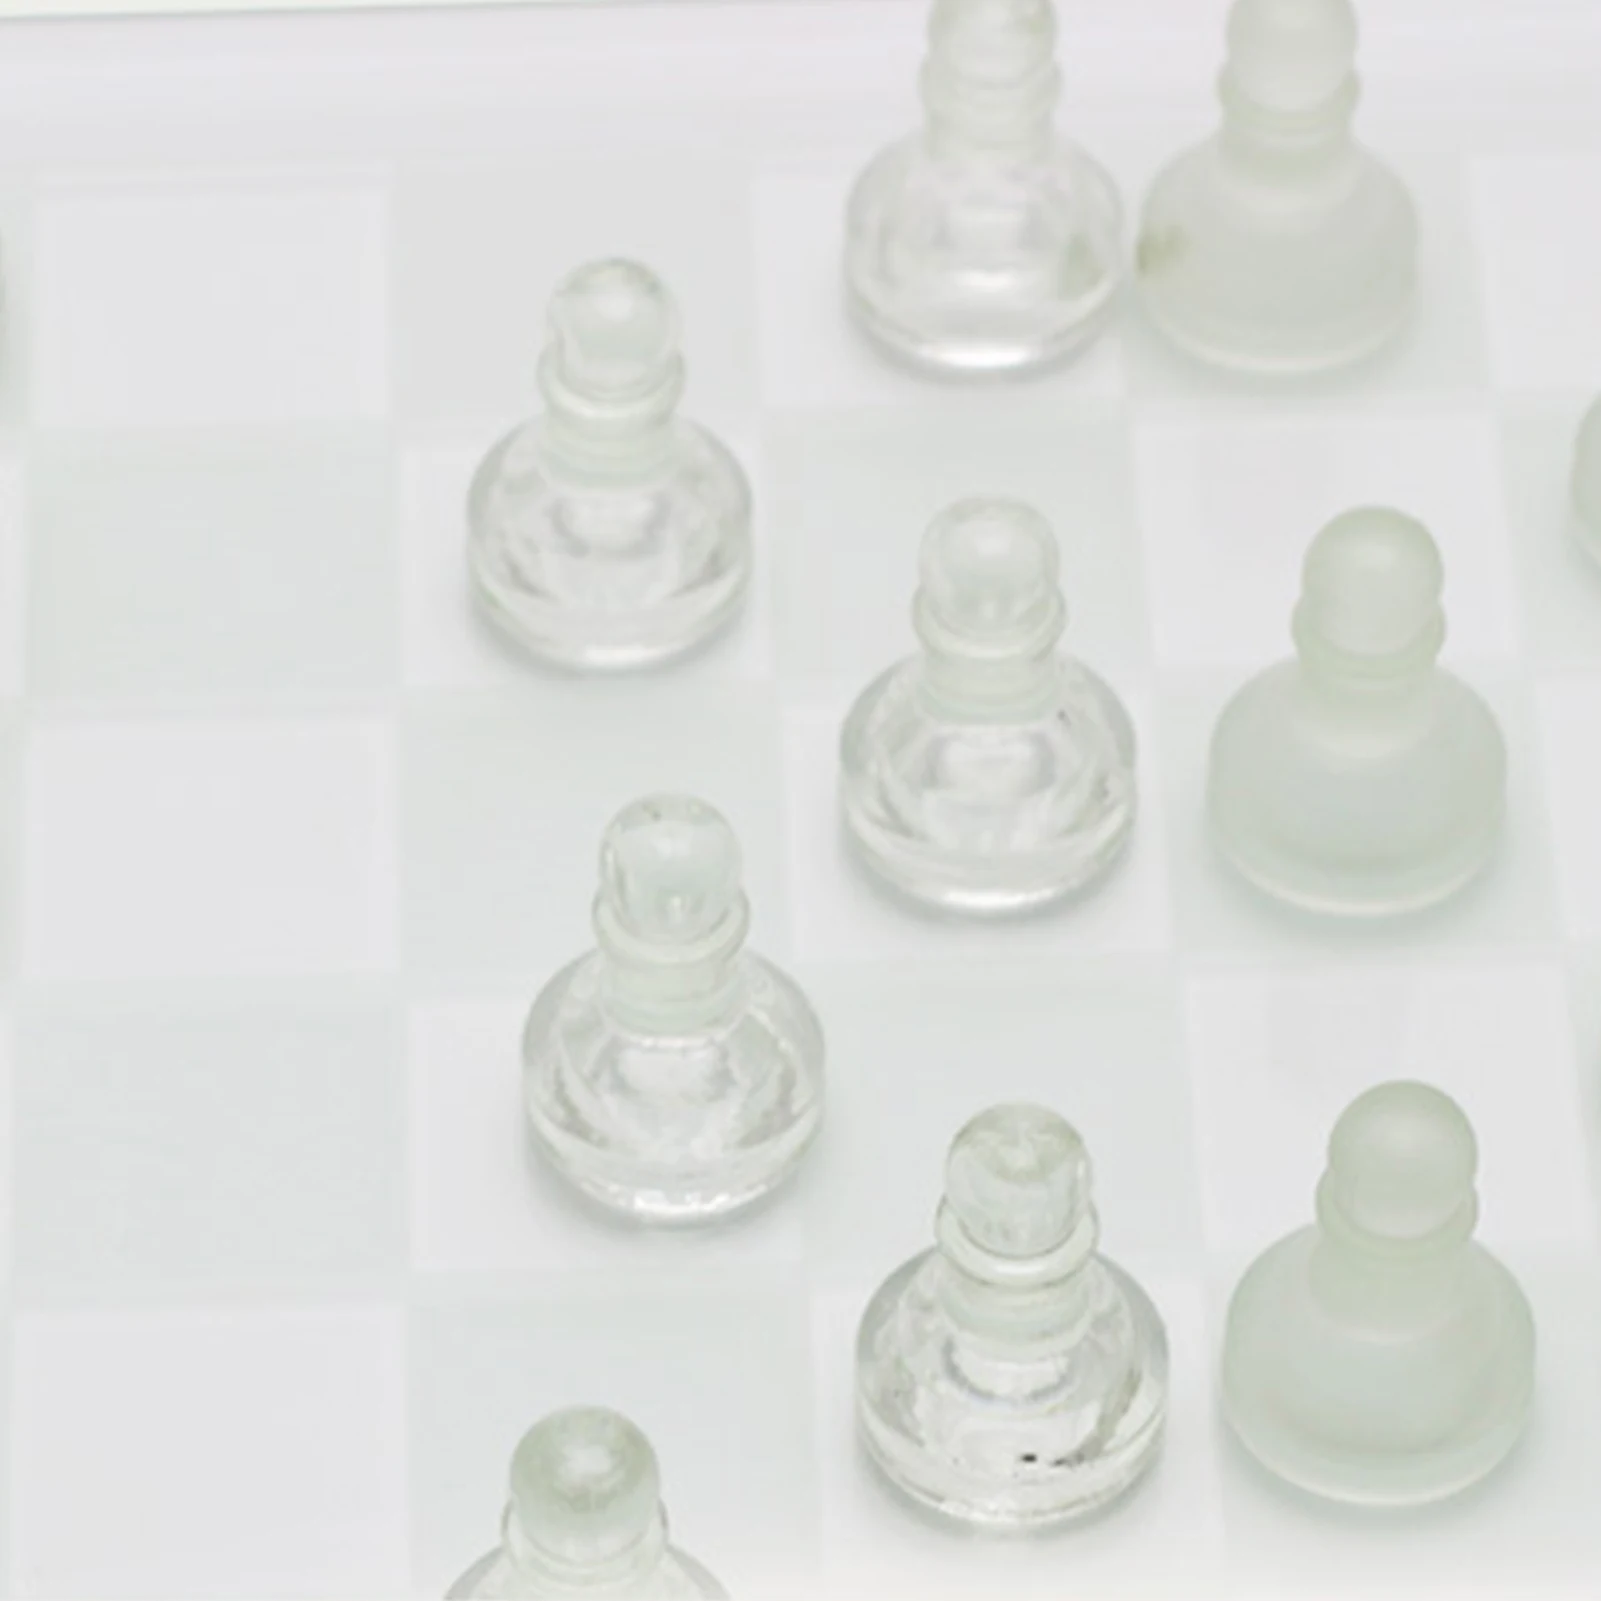 25x25cm Mat prozorno Umetno Kristalno Internationalser Šah z Checker Krovu